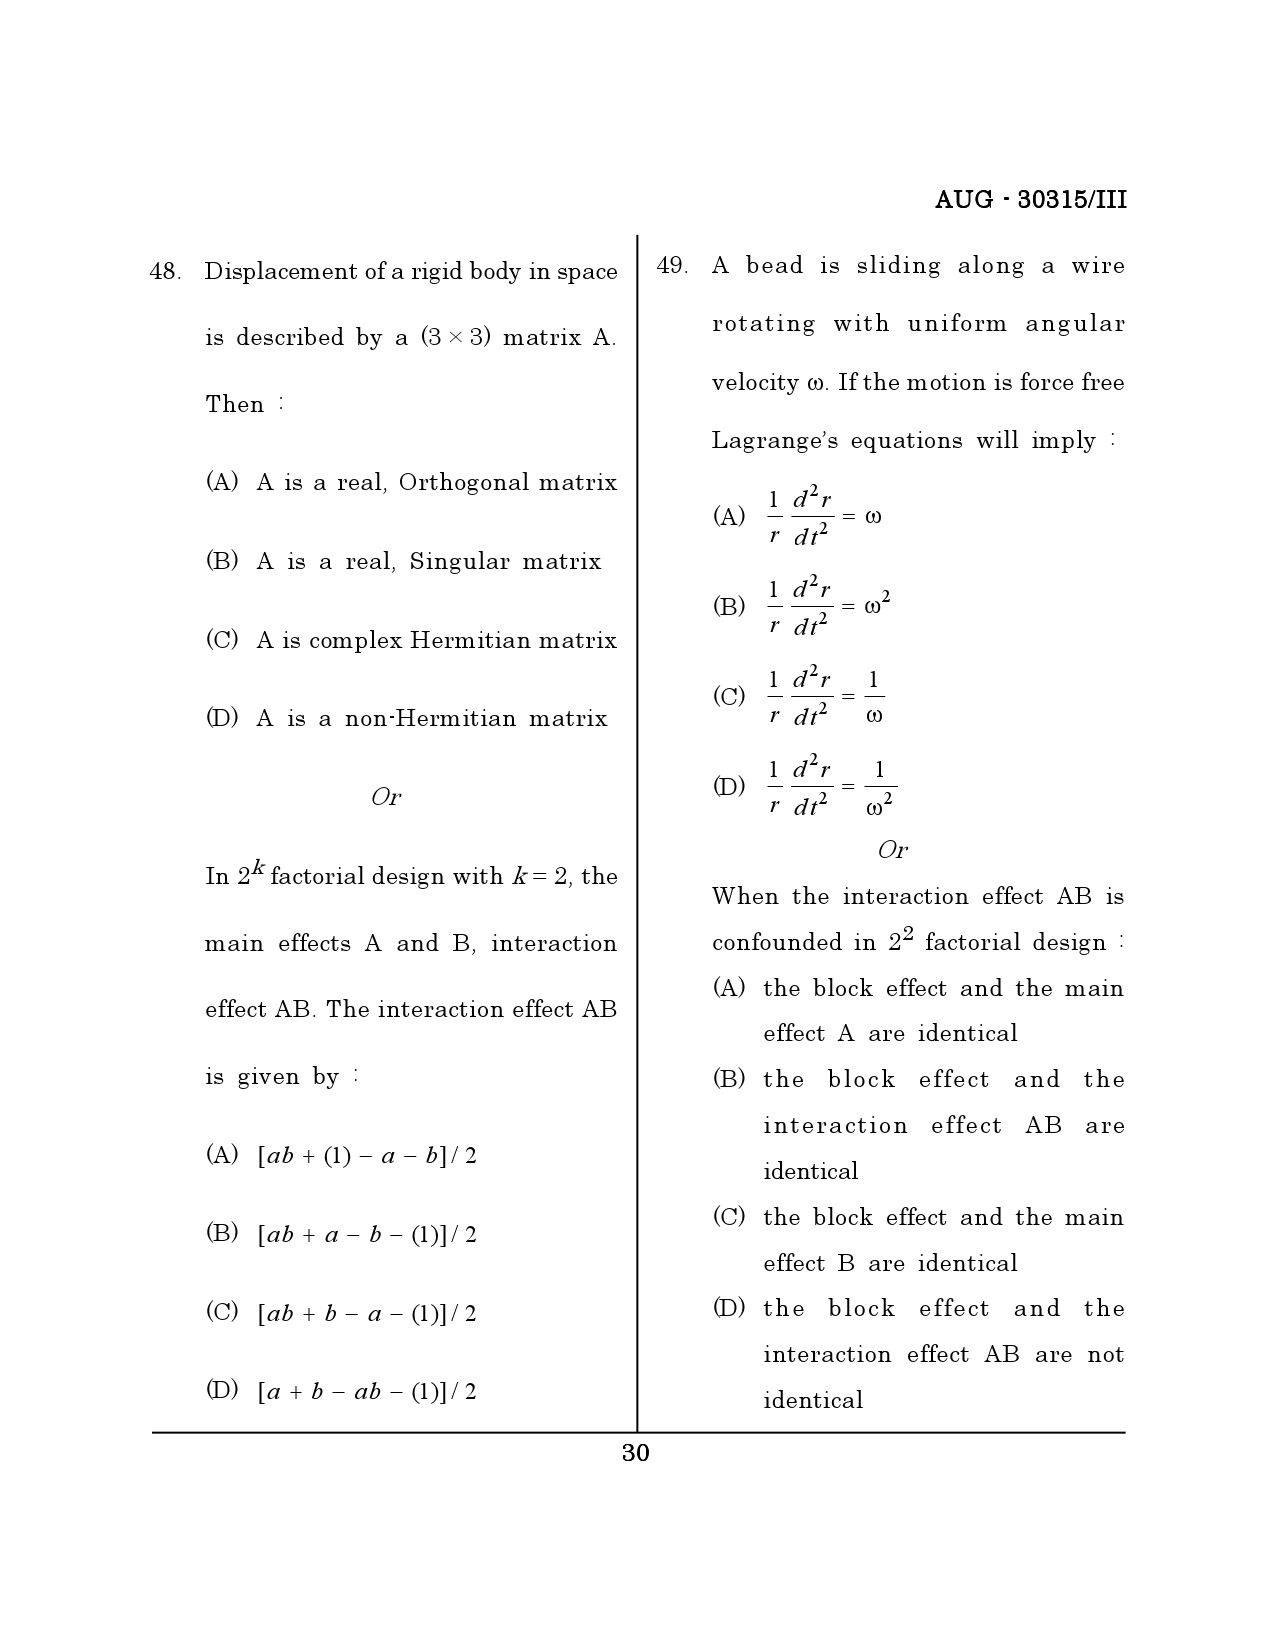 Maharashtra SET Mathematical Sciences Question Paper III August 2015 29